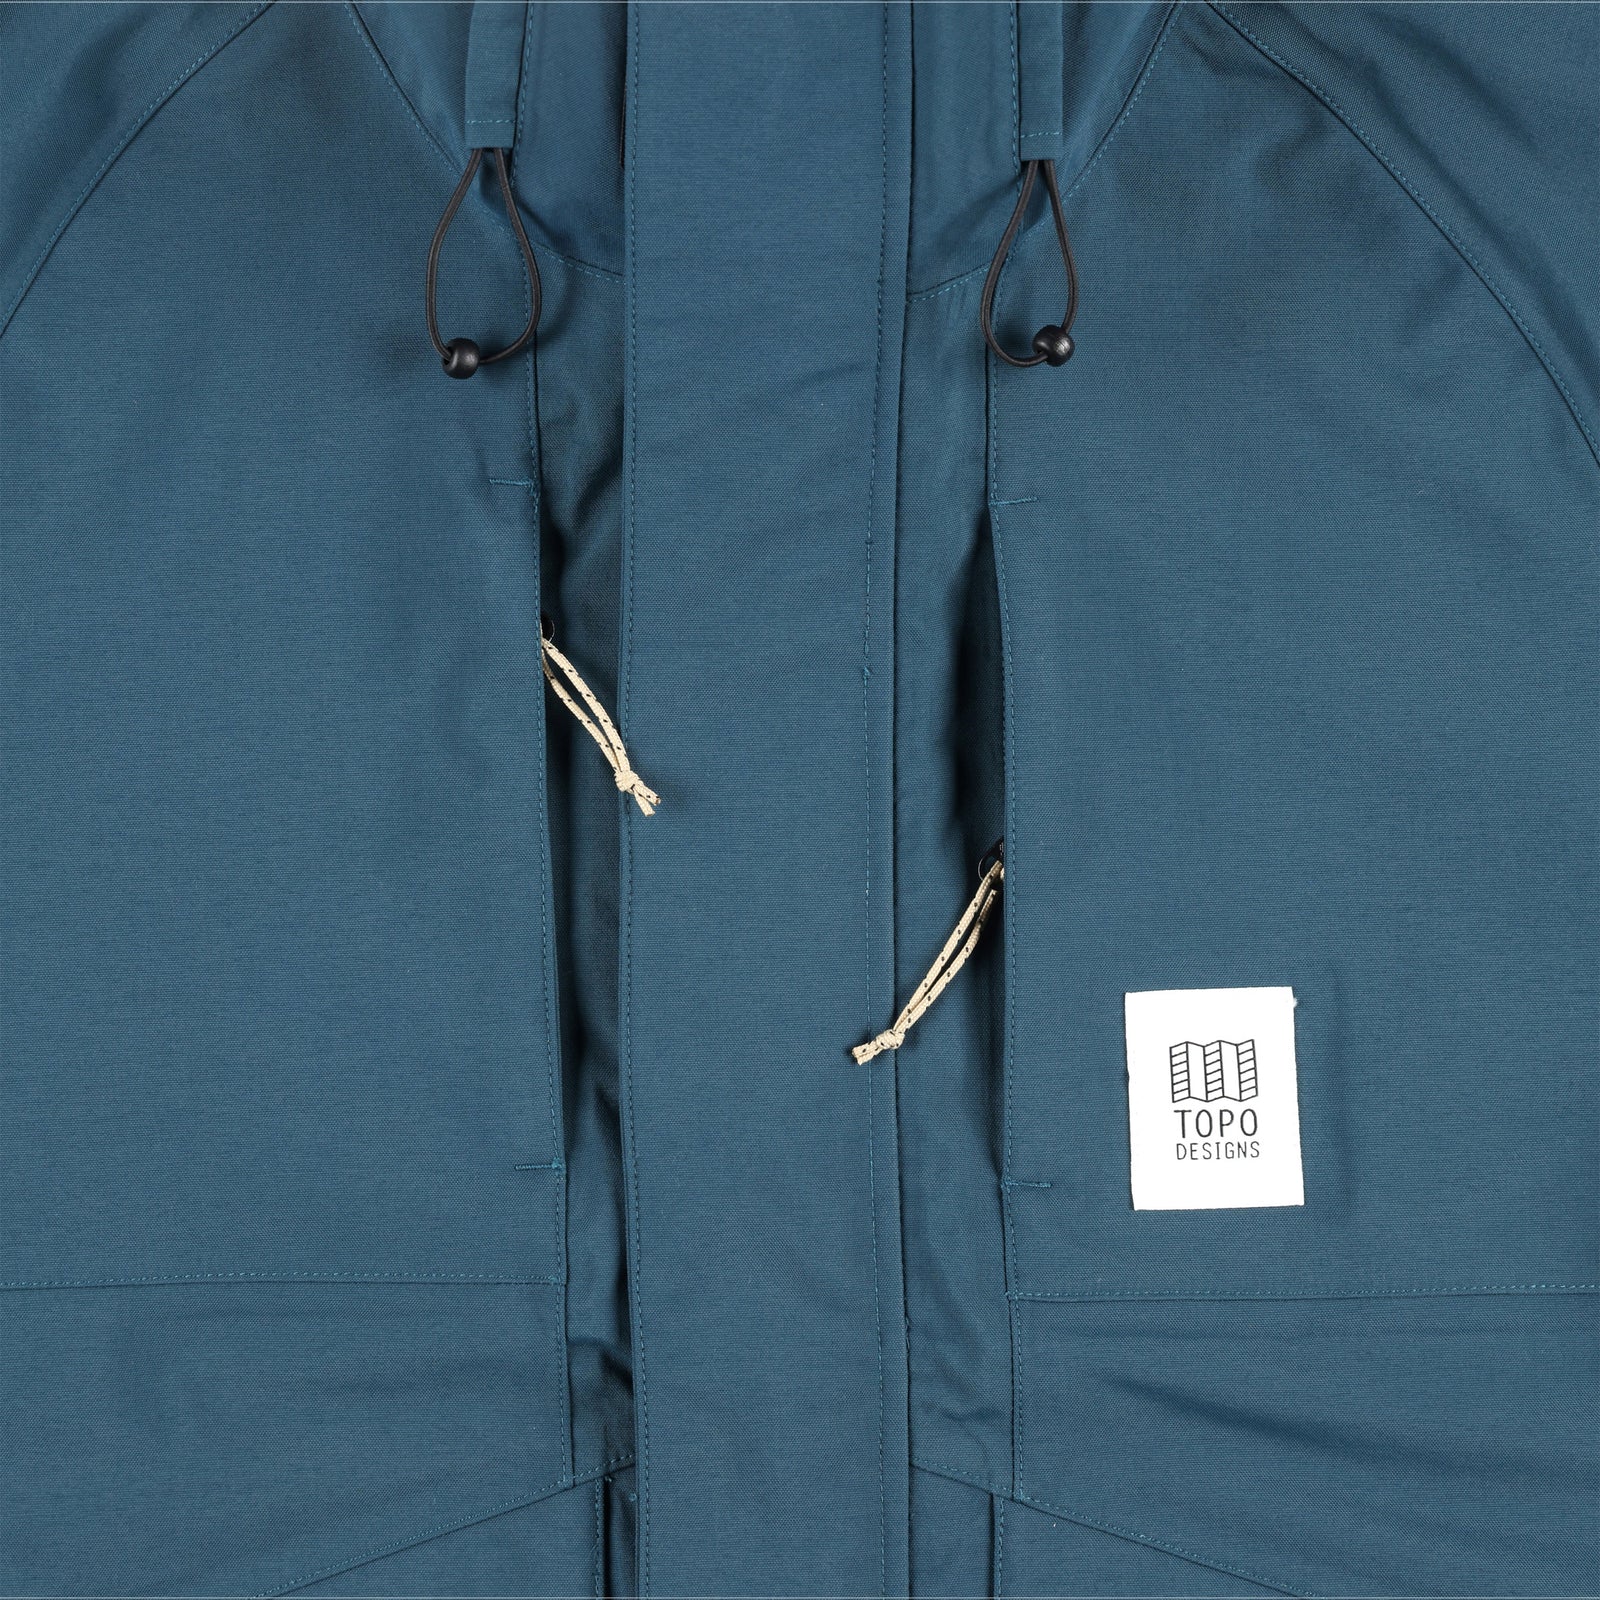 General detail shot of chest zipper pockets on Topo Designs Men's Mountain Parka waterproof shell jacket in "Pond Blue"